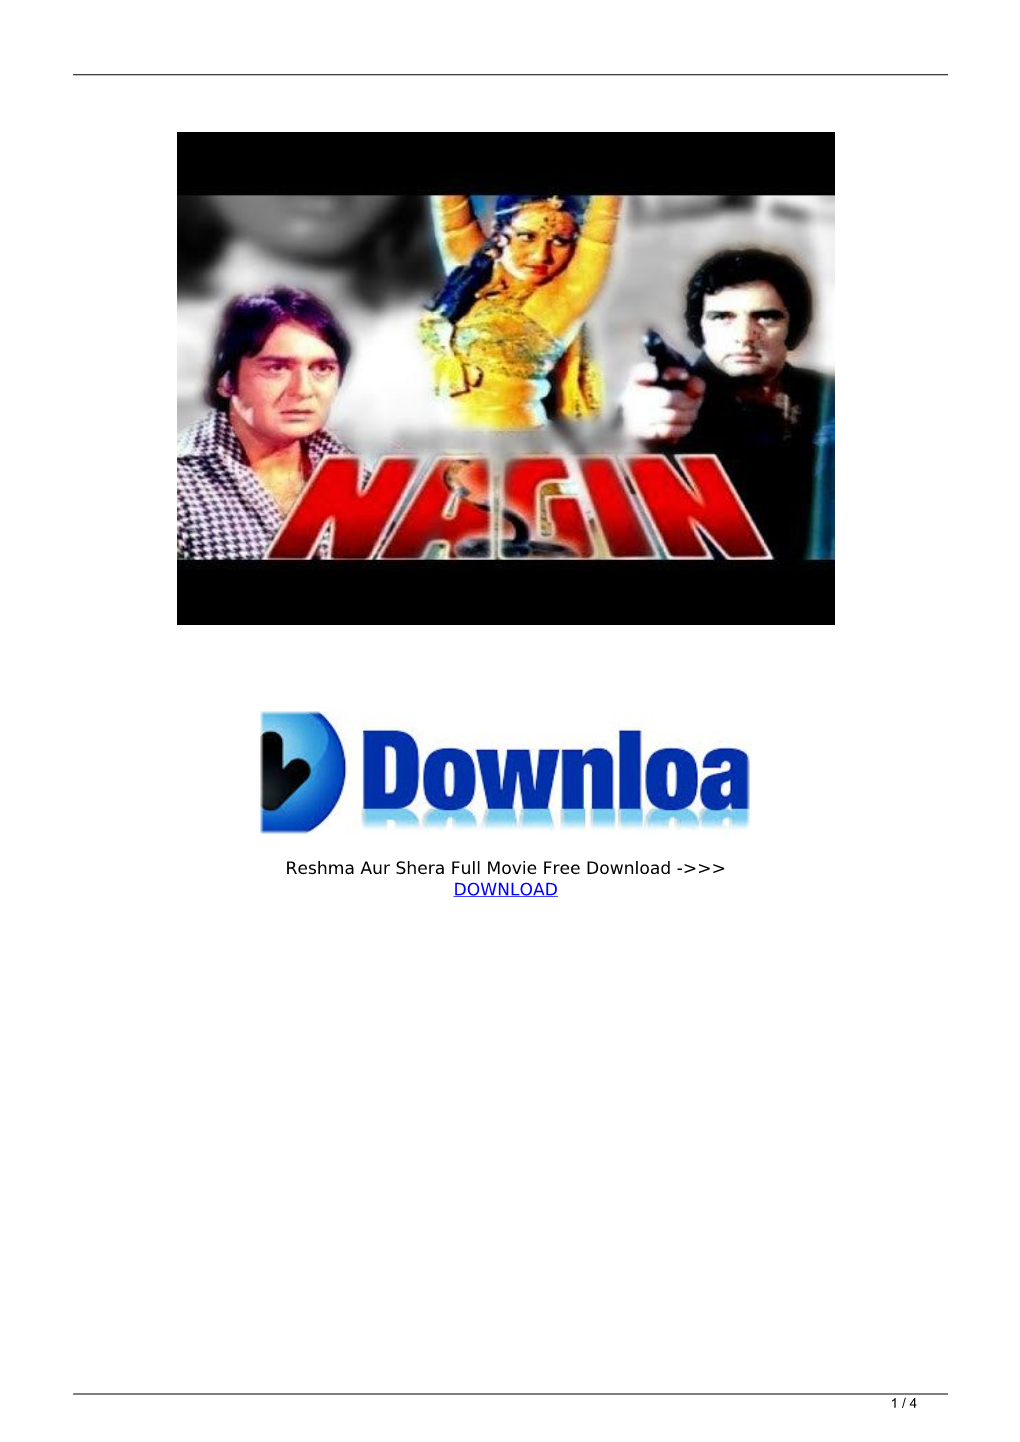 Reshma Aur Shera Full Movie Free Download ->>> DOWNLOAD